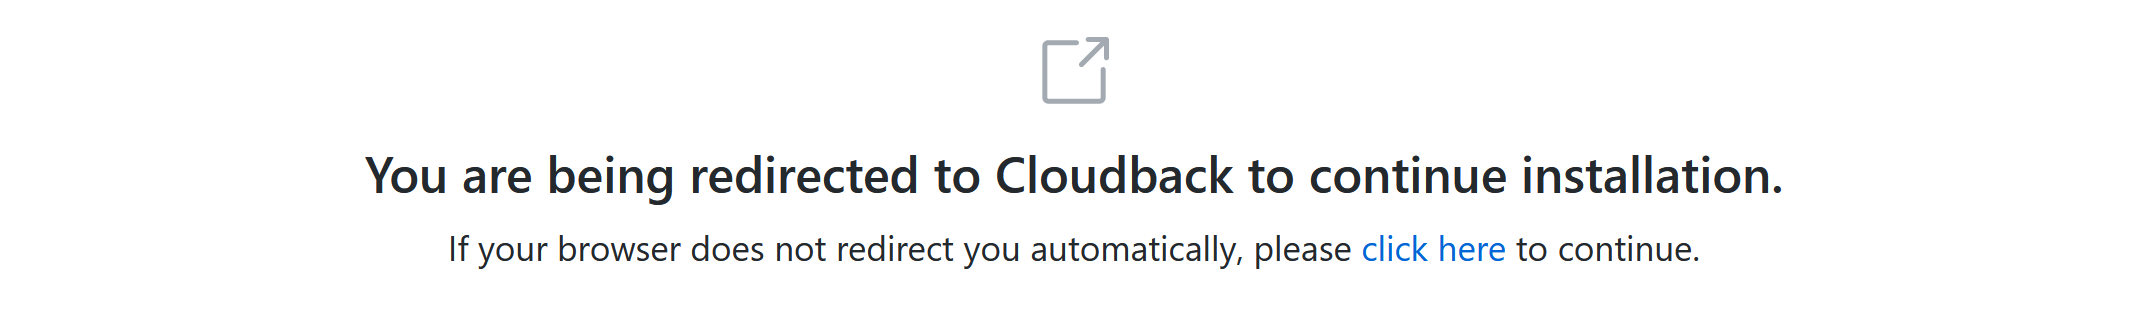 redirecting to Cloudback dashboard